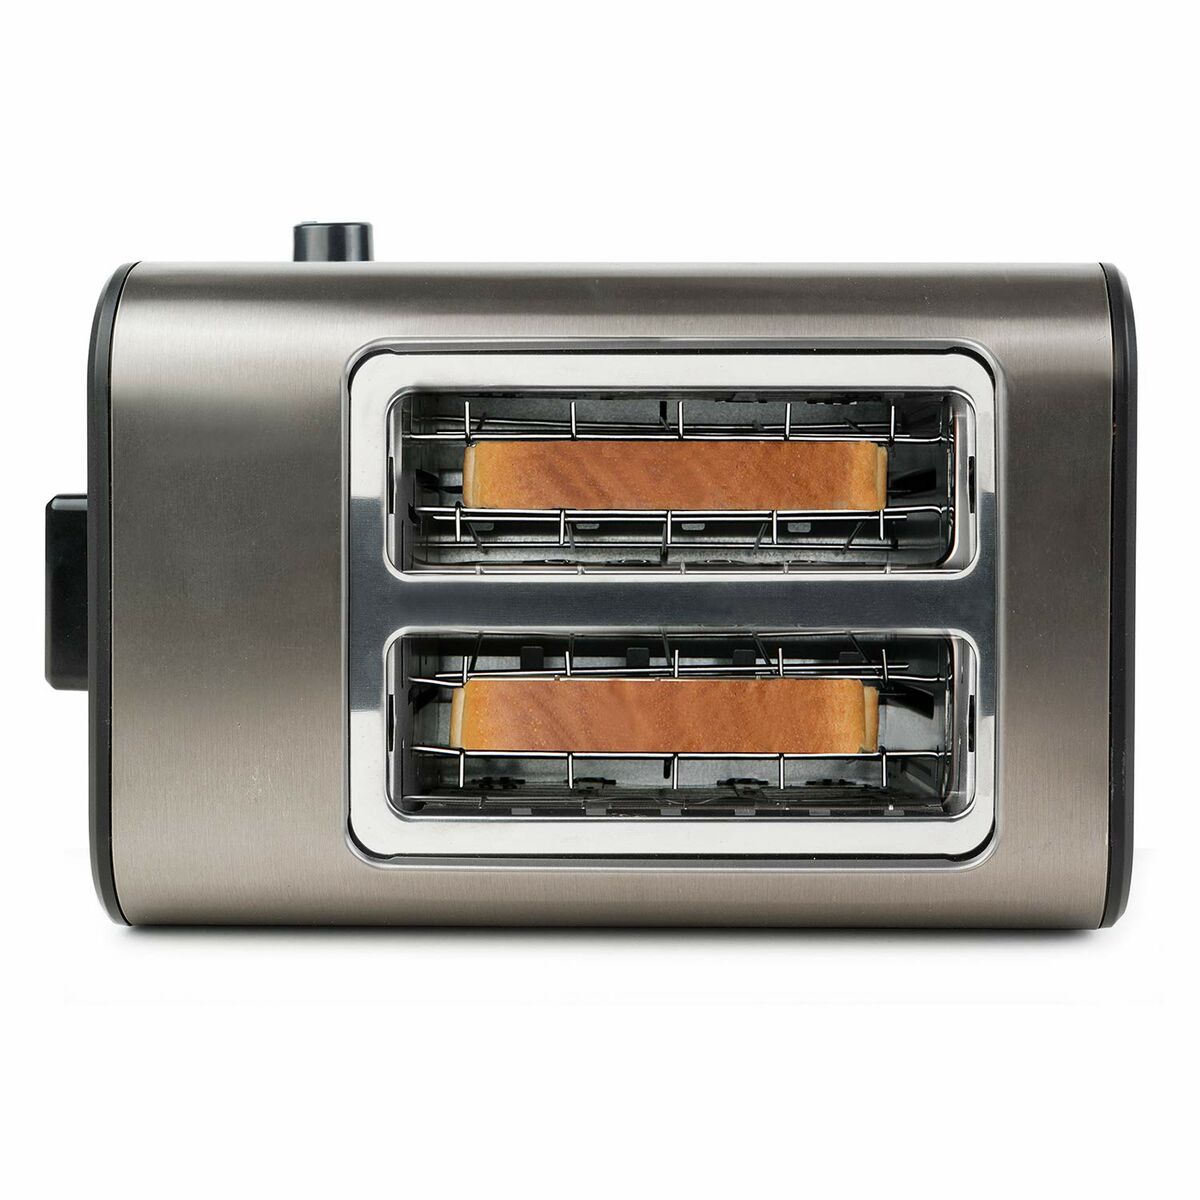 Toaster Black & Decker 900W 900 W - CA International  